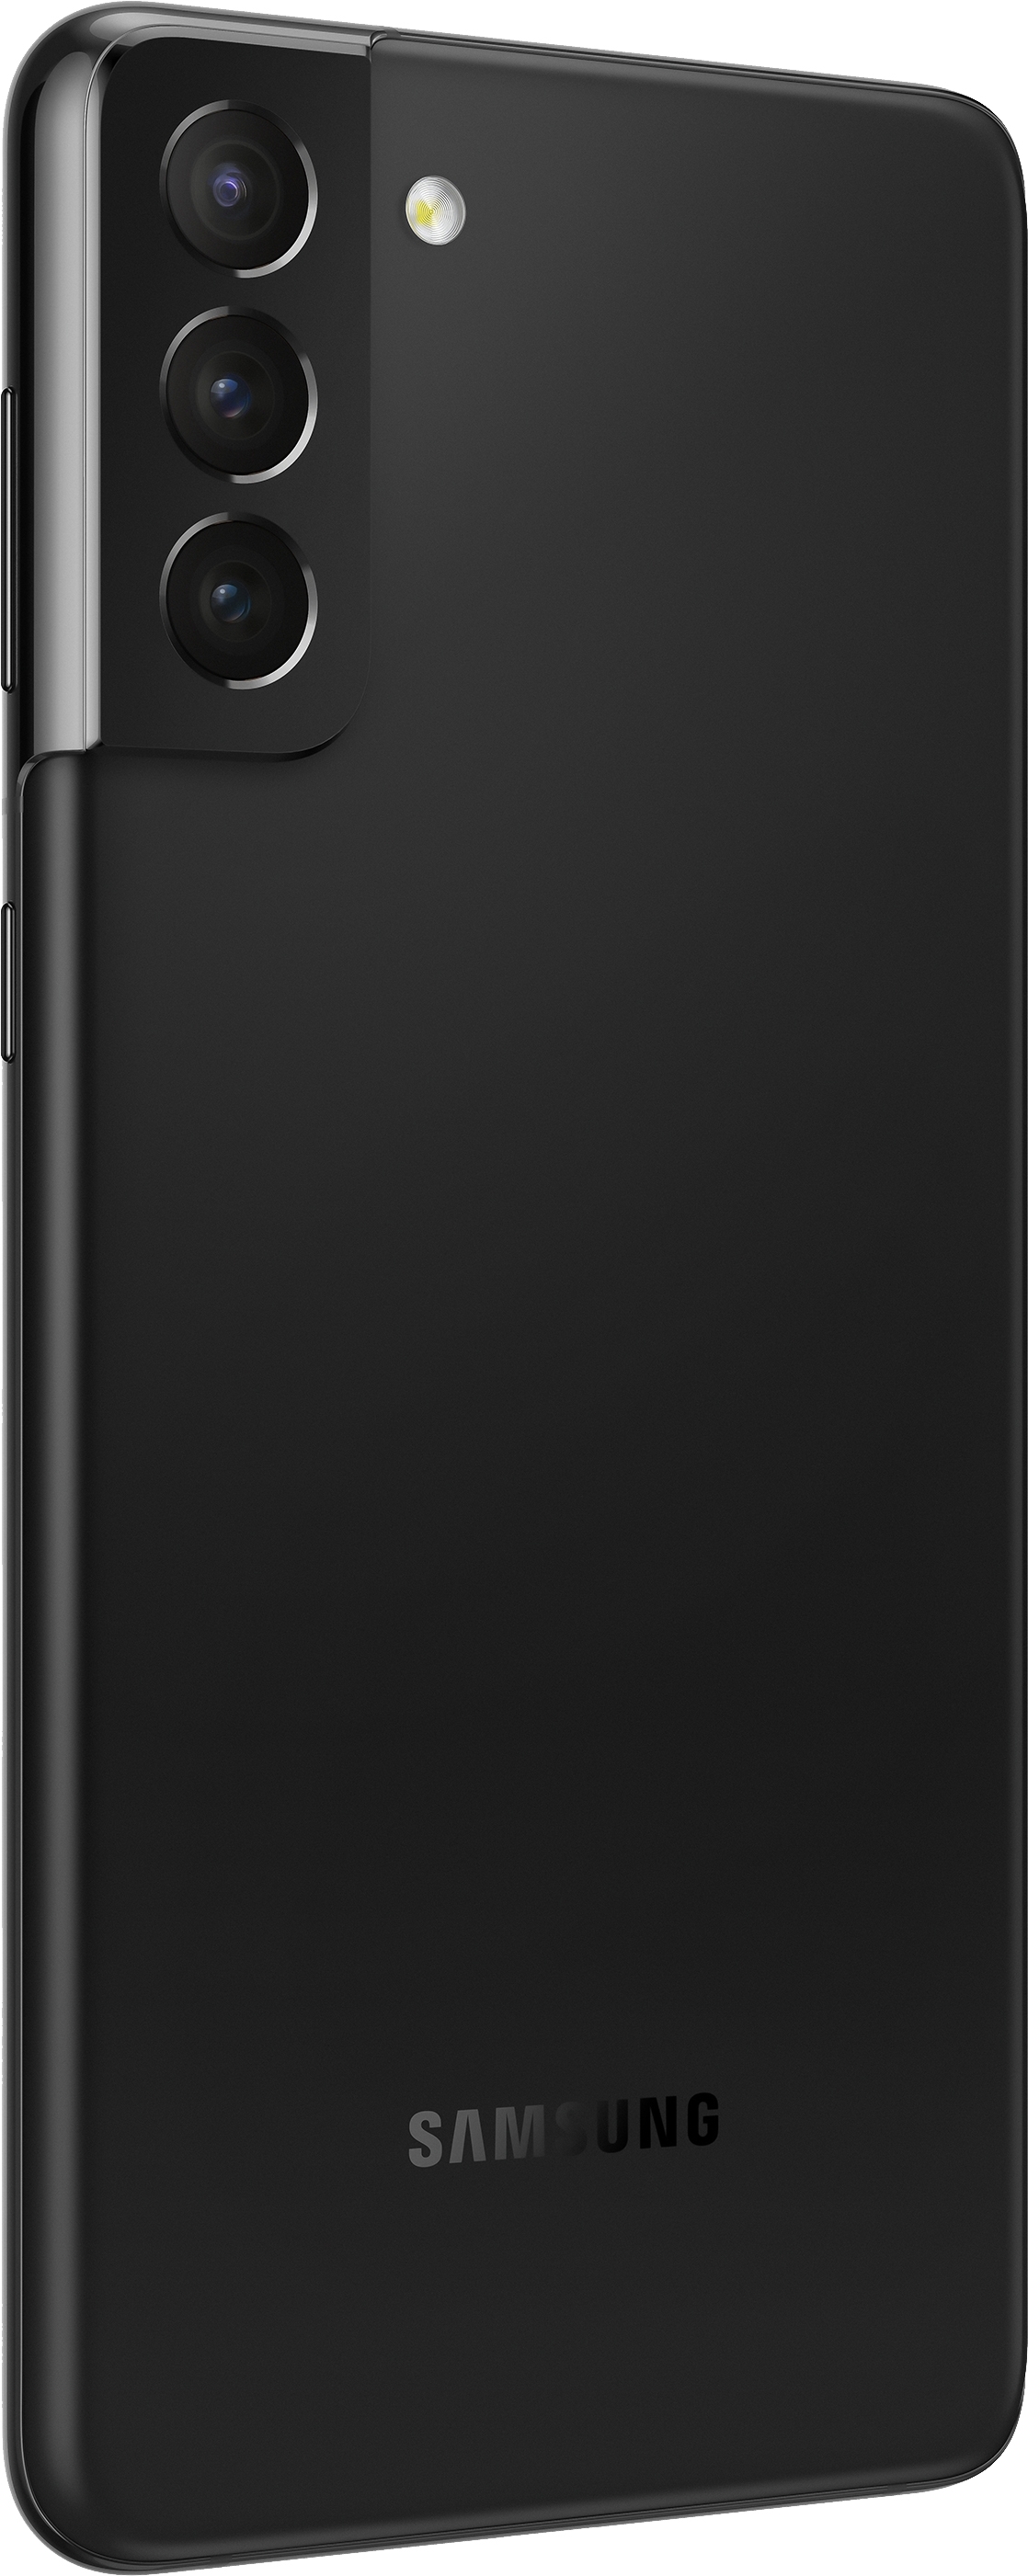 Samsung Galaxy S21+ 5G SM-G996B 8/256GB 